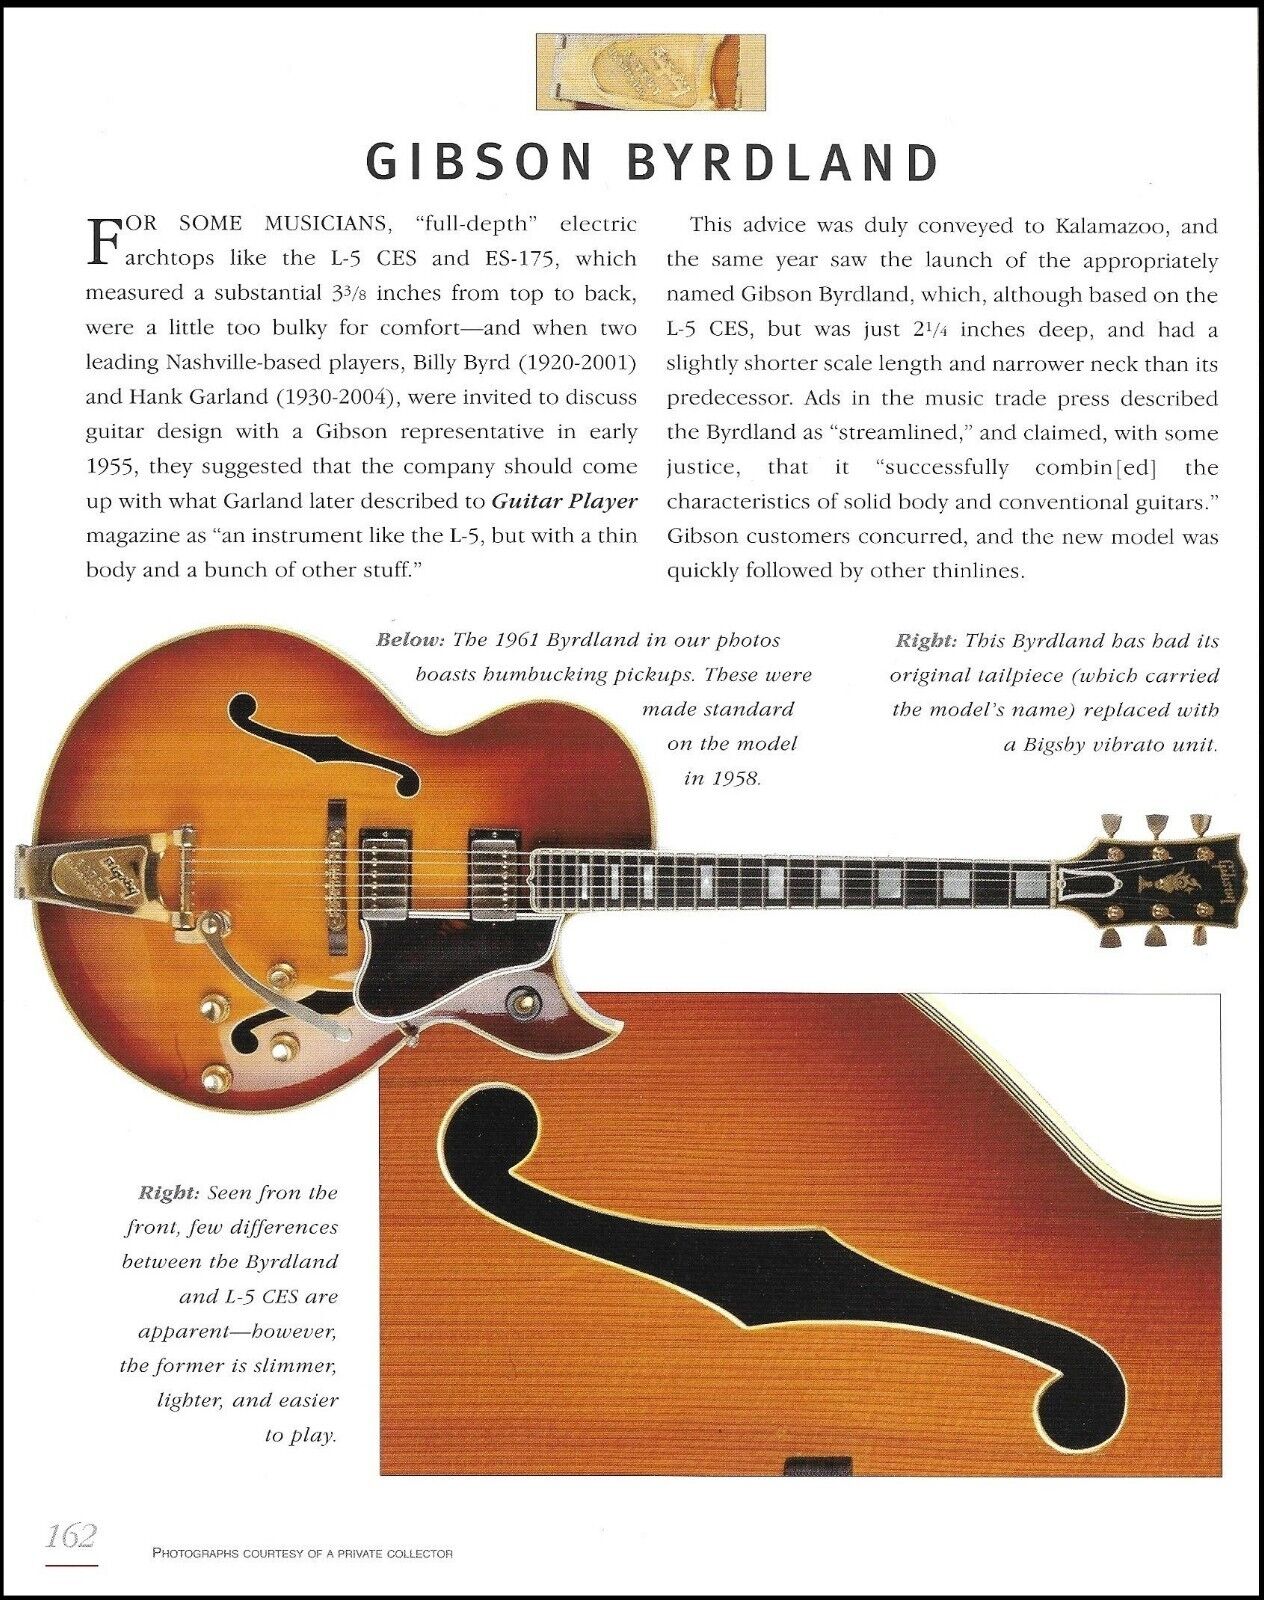 1961 Gibson Byrdland acoustic guitar 8.5 x 11 pin-up photo history article